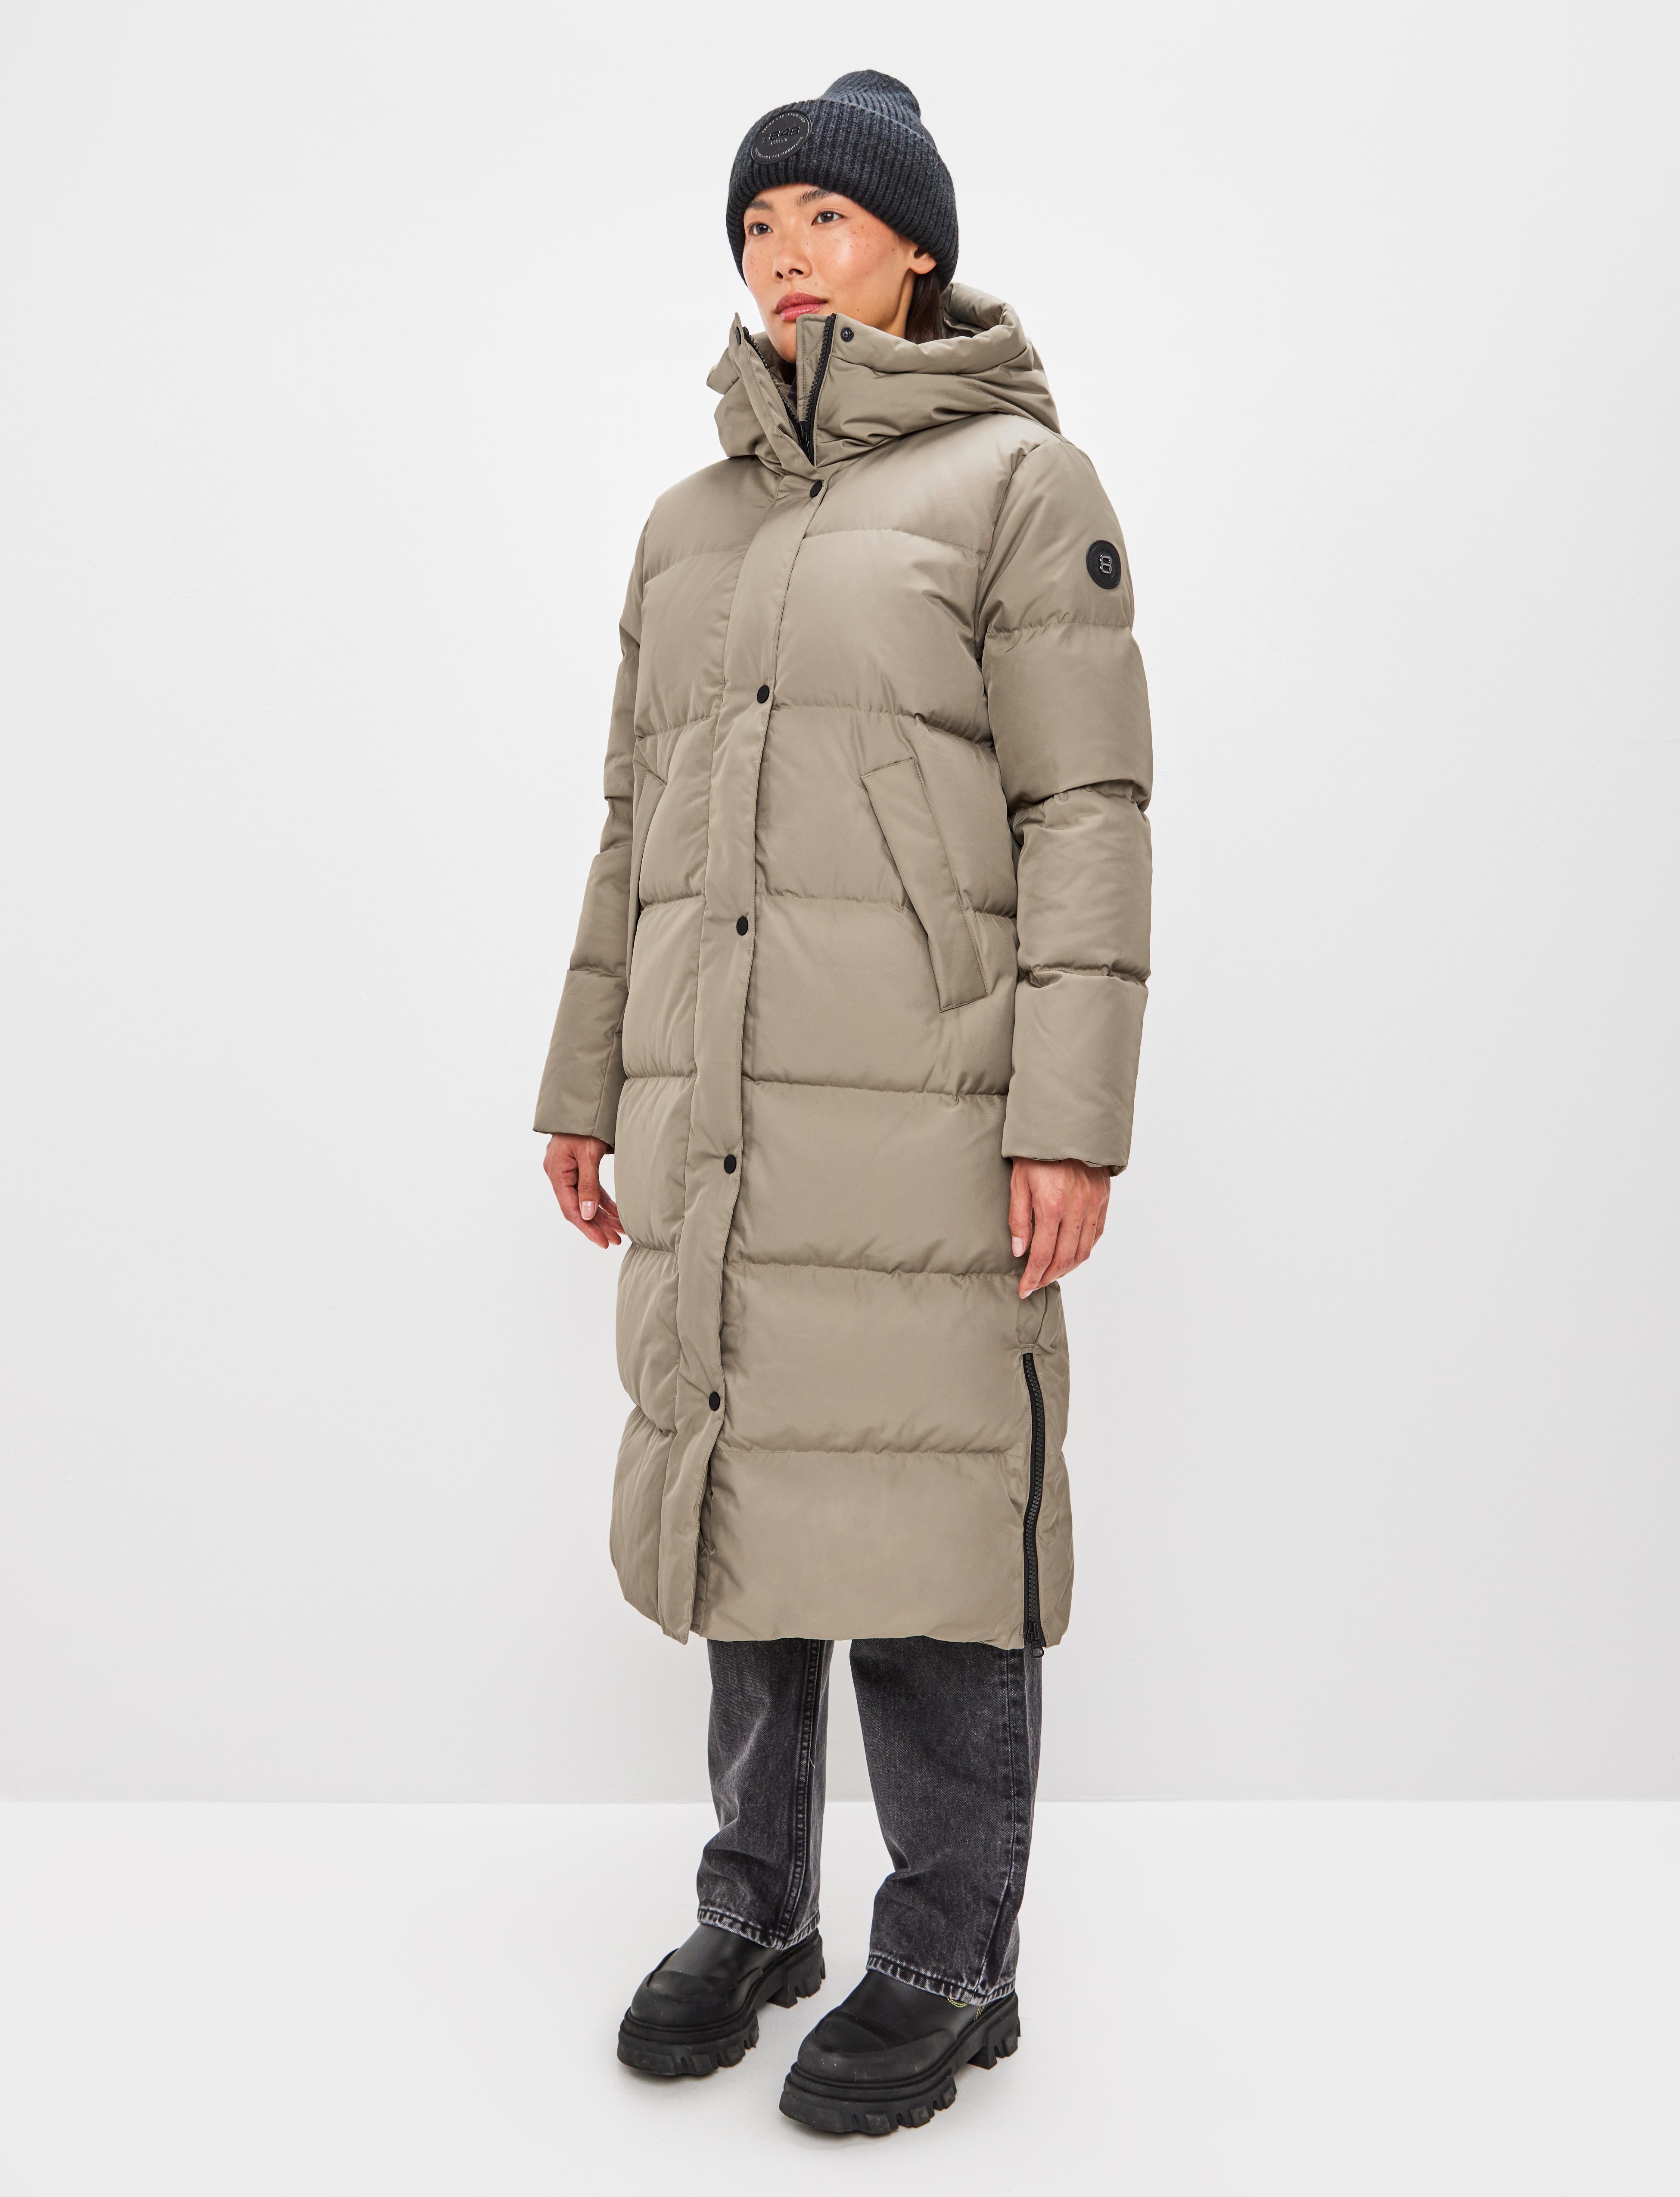 Premium Ski Fashion | Technical Outerwear | Exclusive - 8848 Altitude